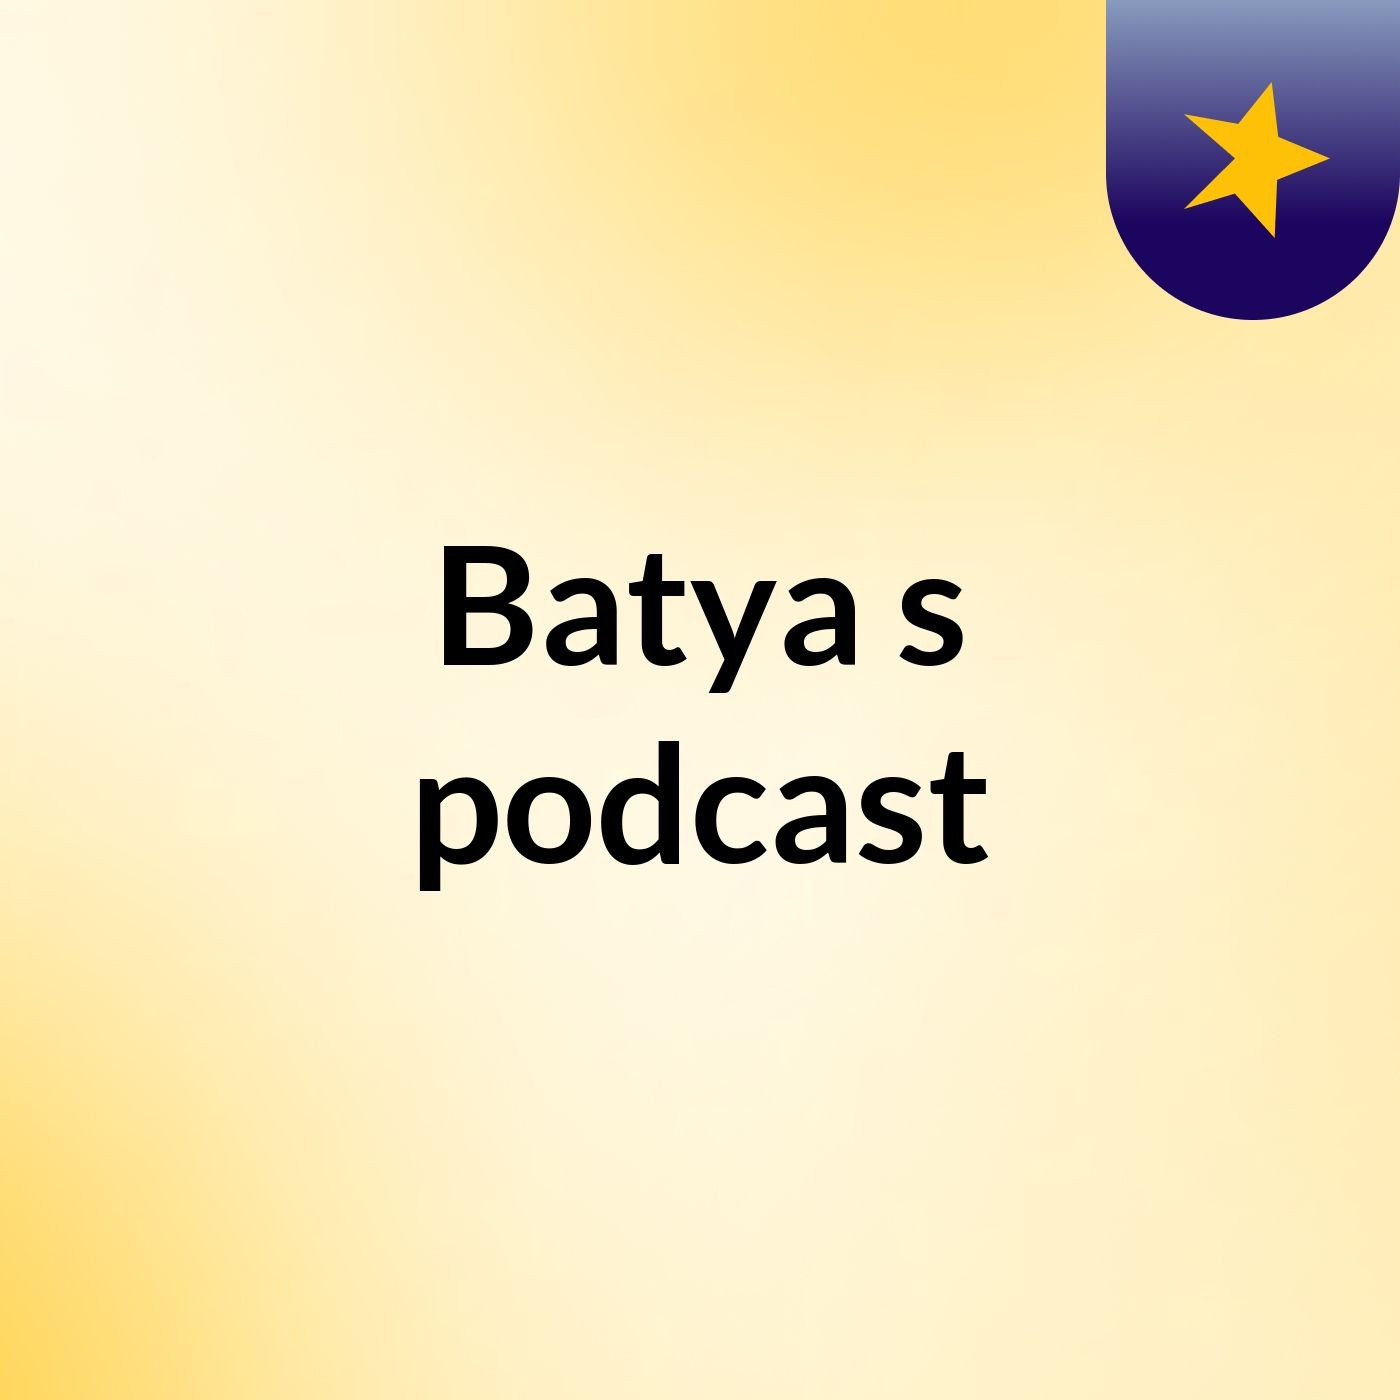 Batya's podcast